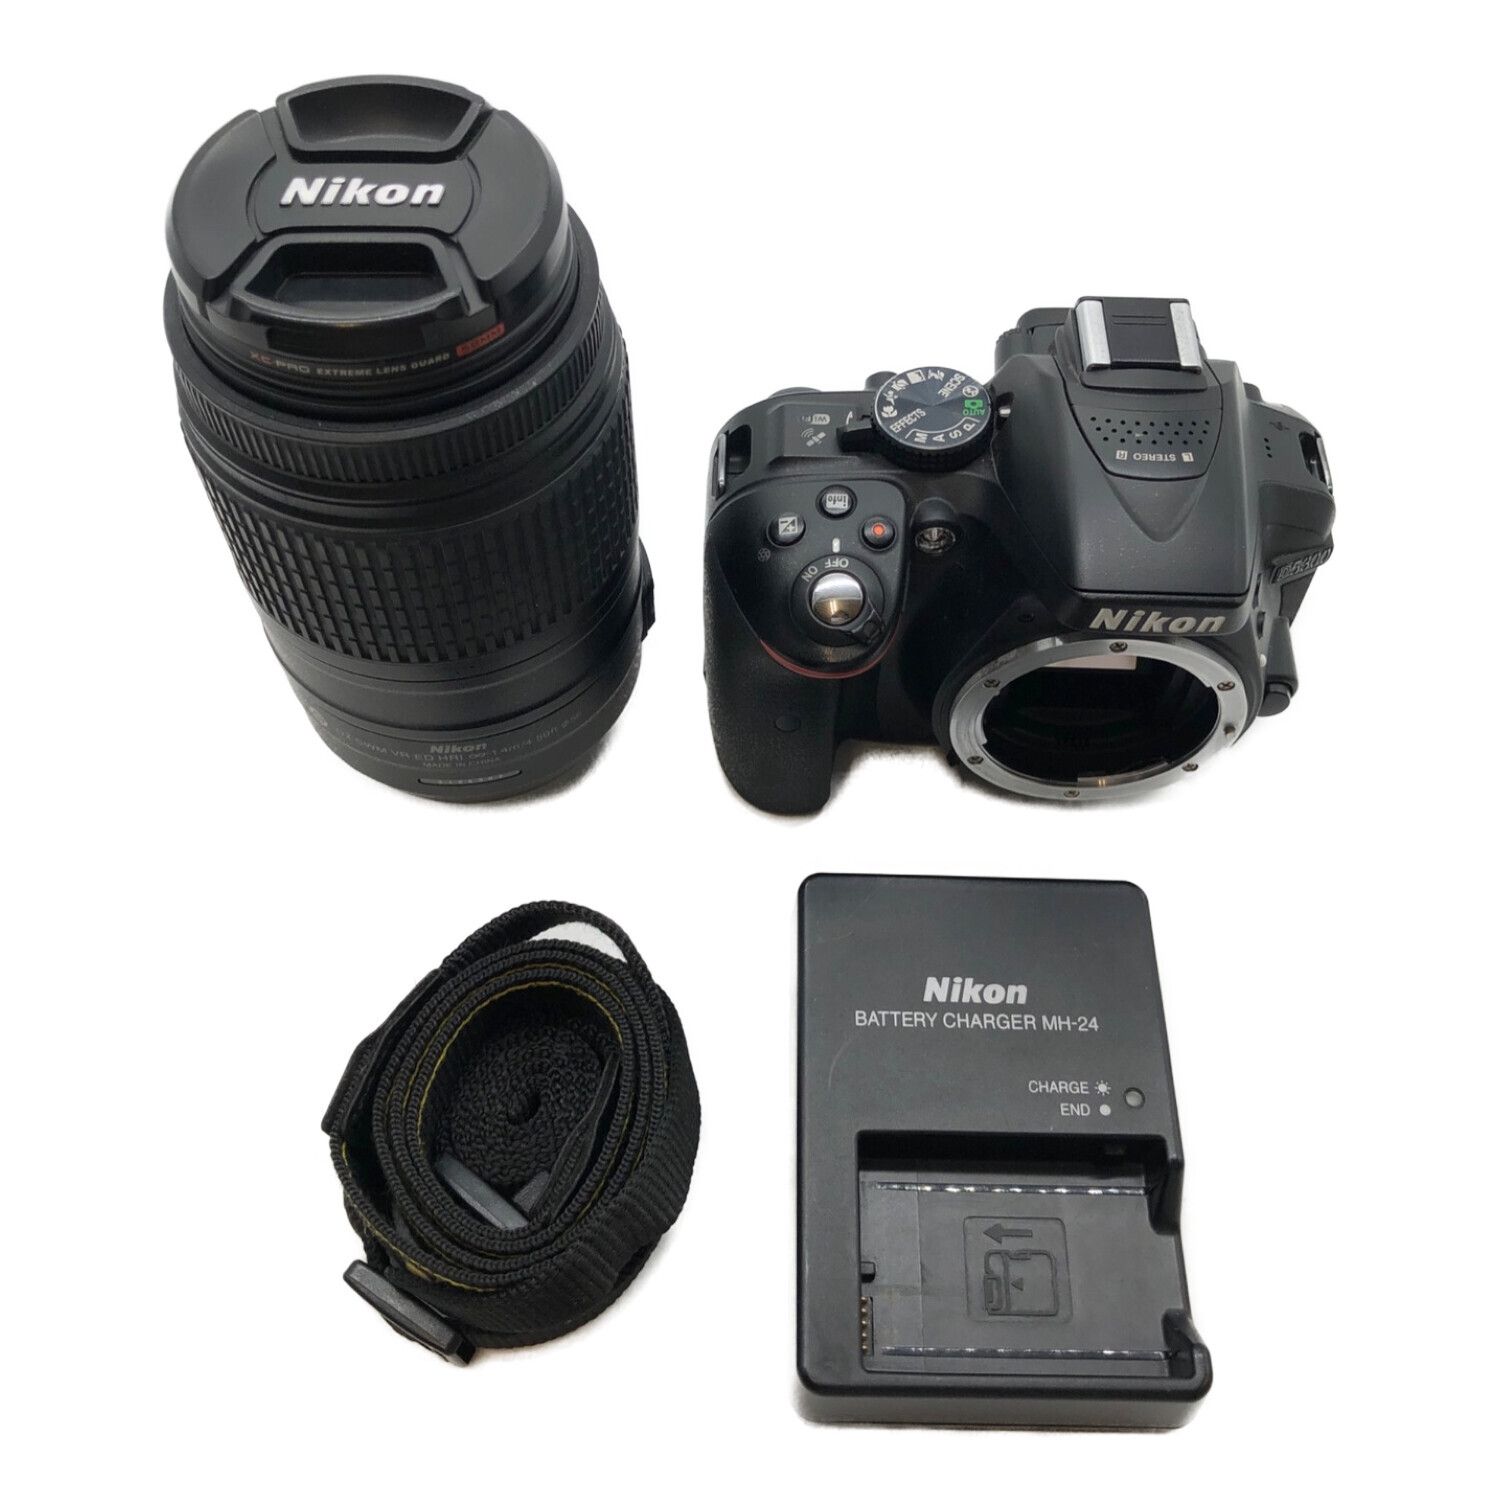 D5300 Nikonスマホ/家電/カメラ